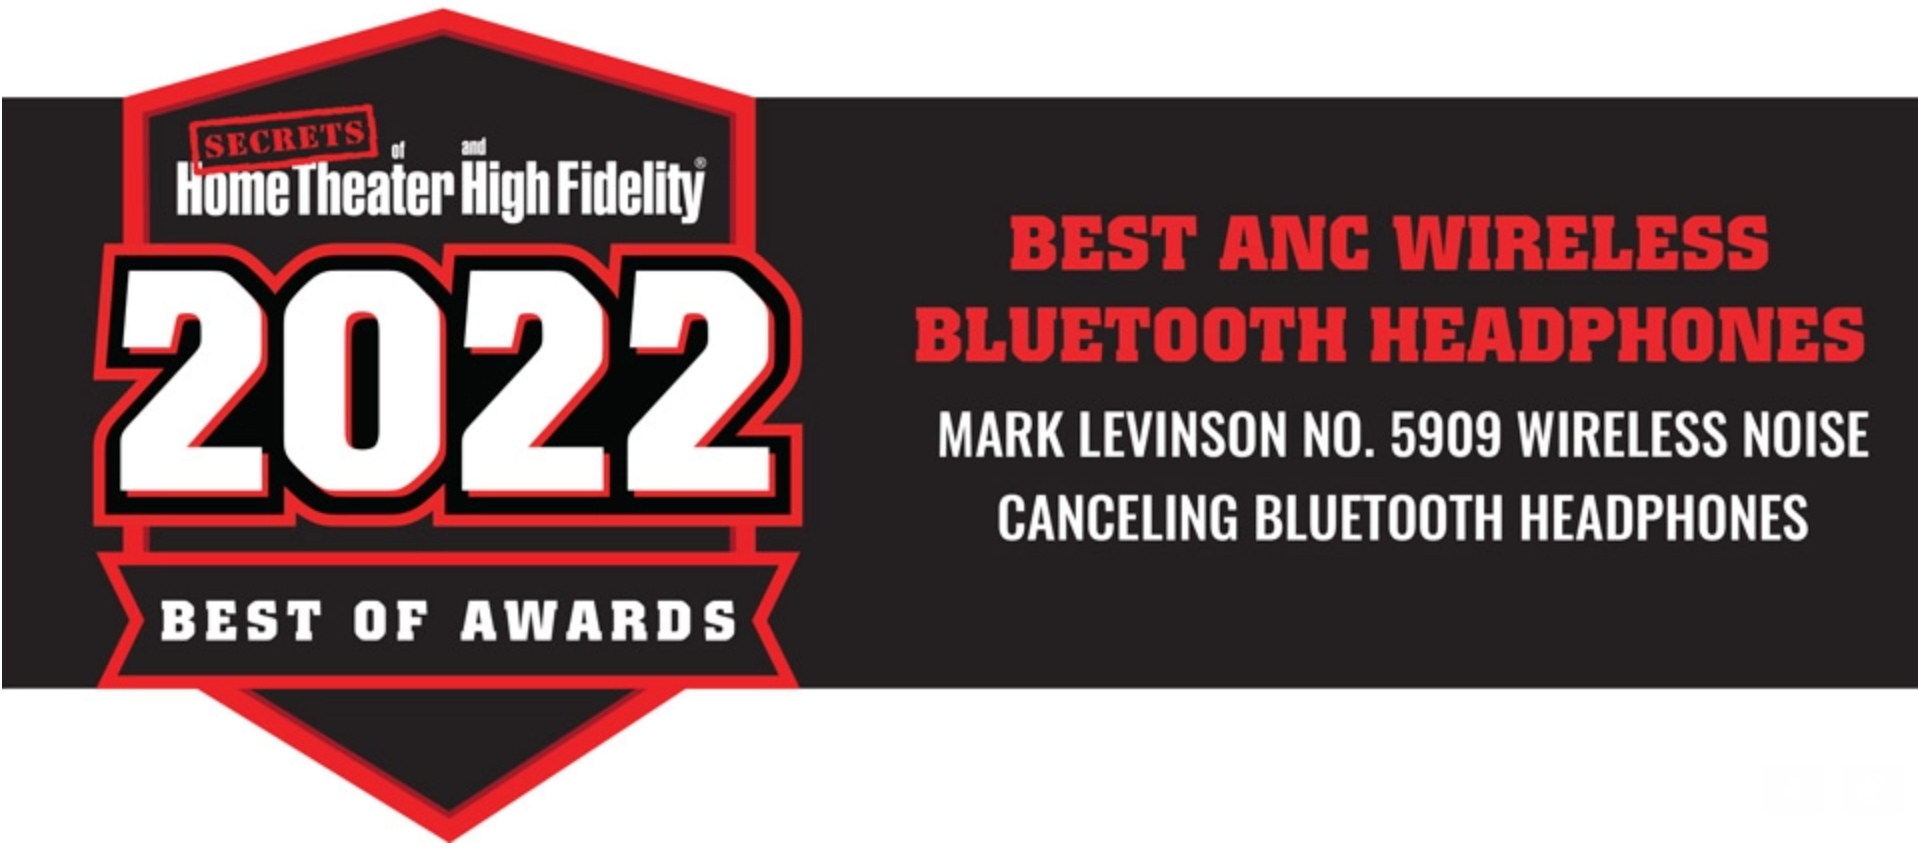 Home Theatre High Fidelity Award - Best ANC Wireless Bluetooth Headphones 2022